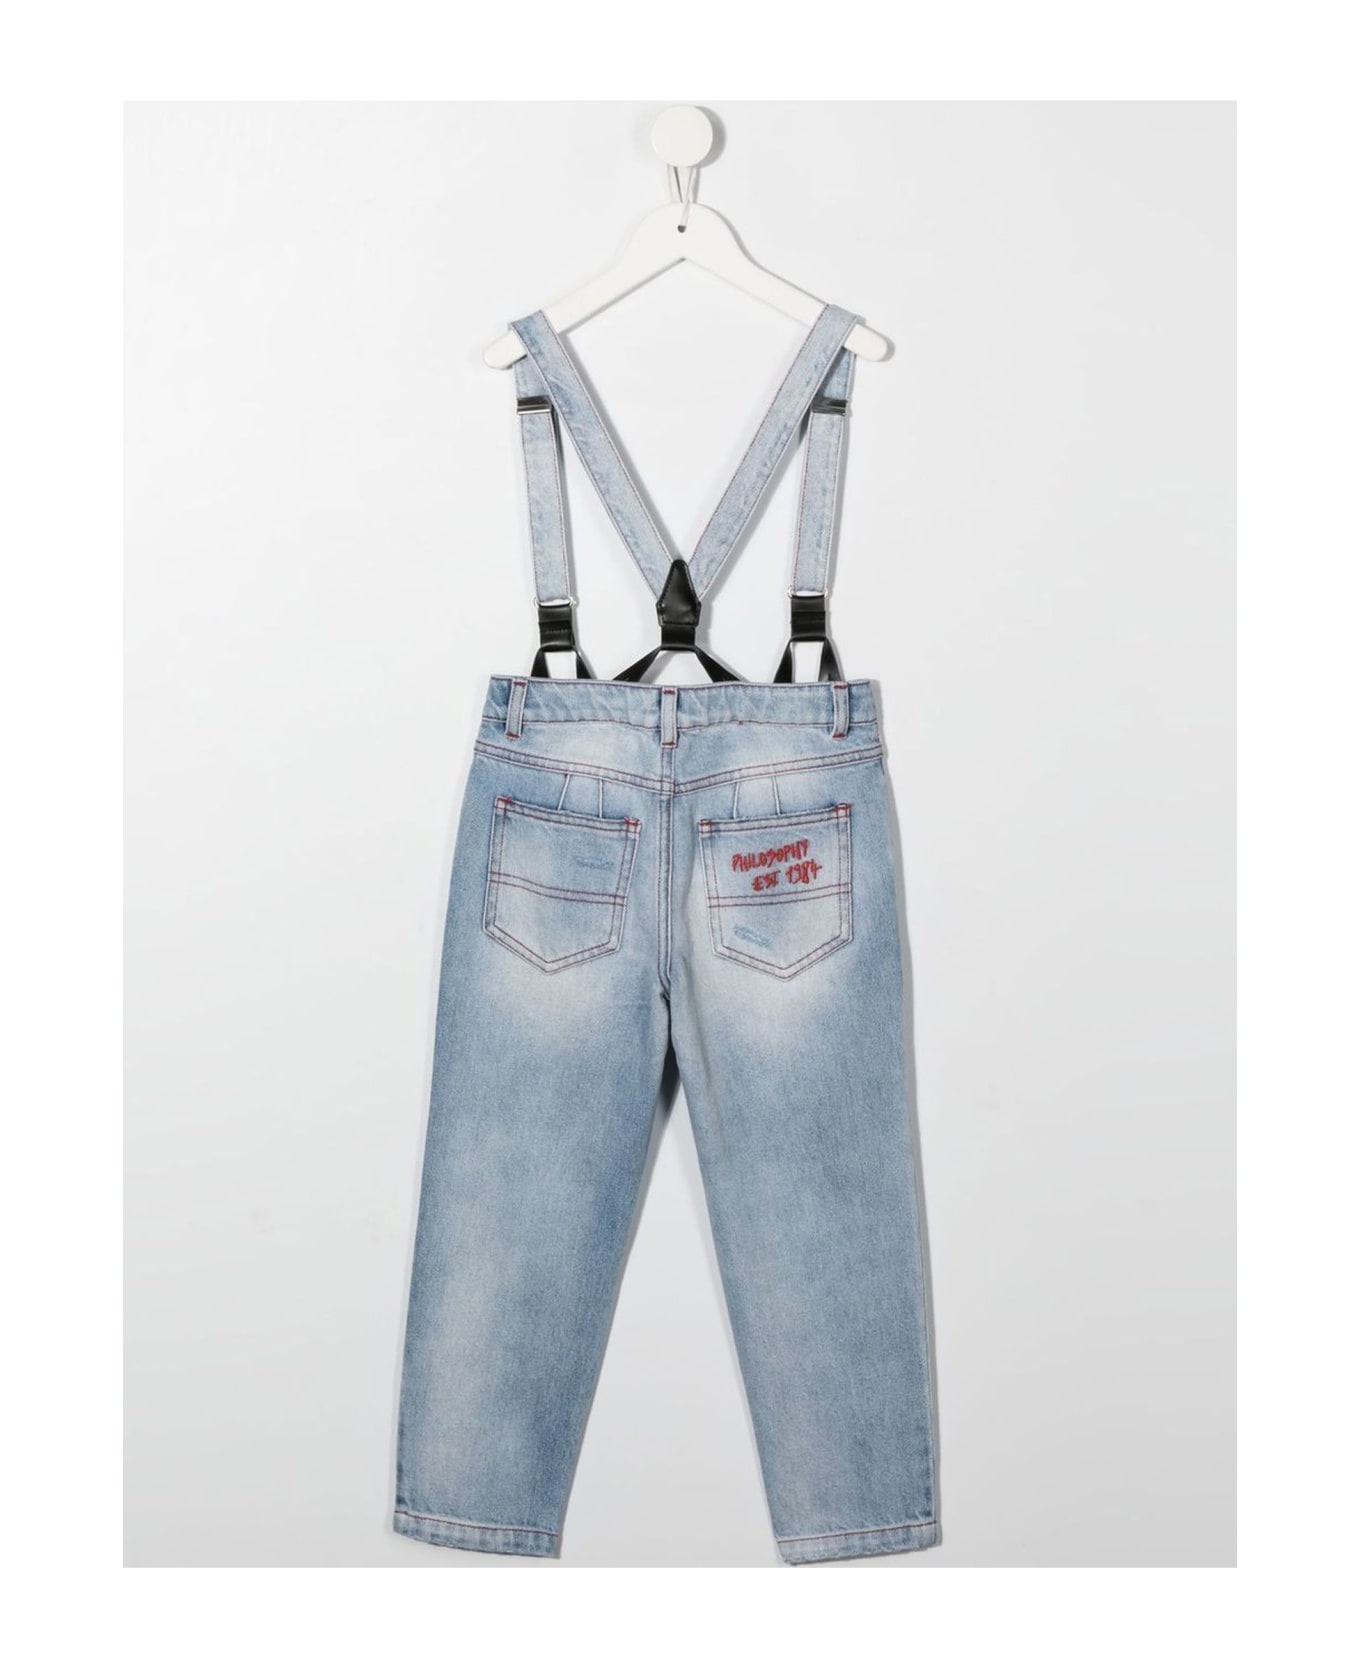 Philosophy di Lorenzo Serafini Kids Blue Cotton Jeans - Denim